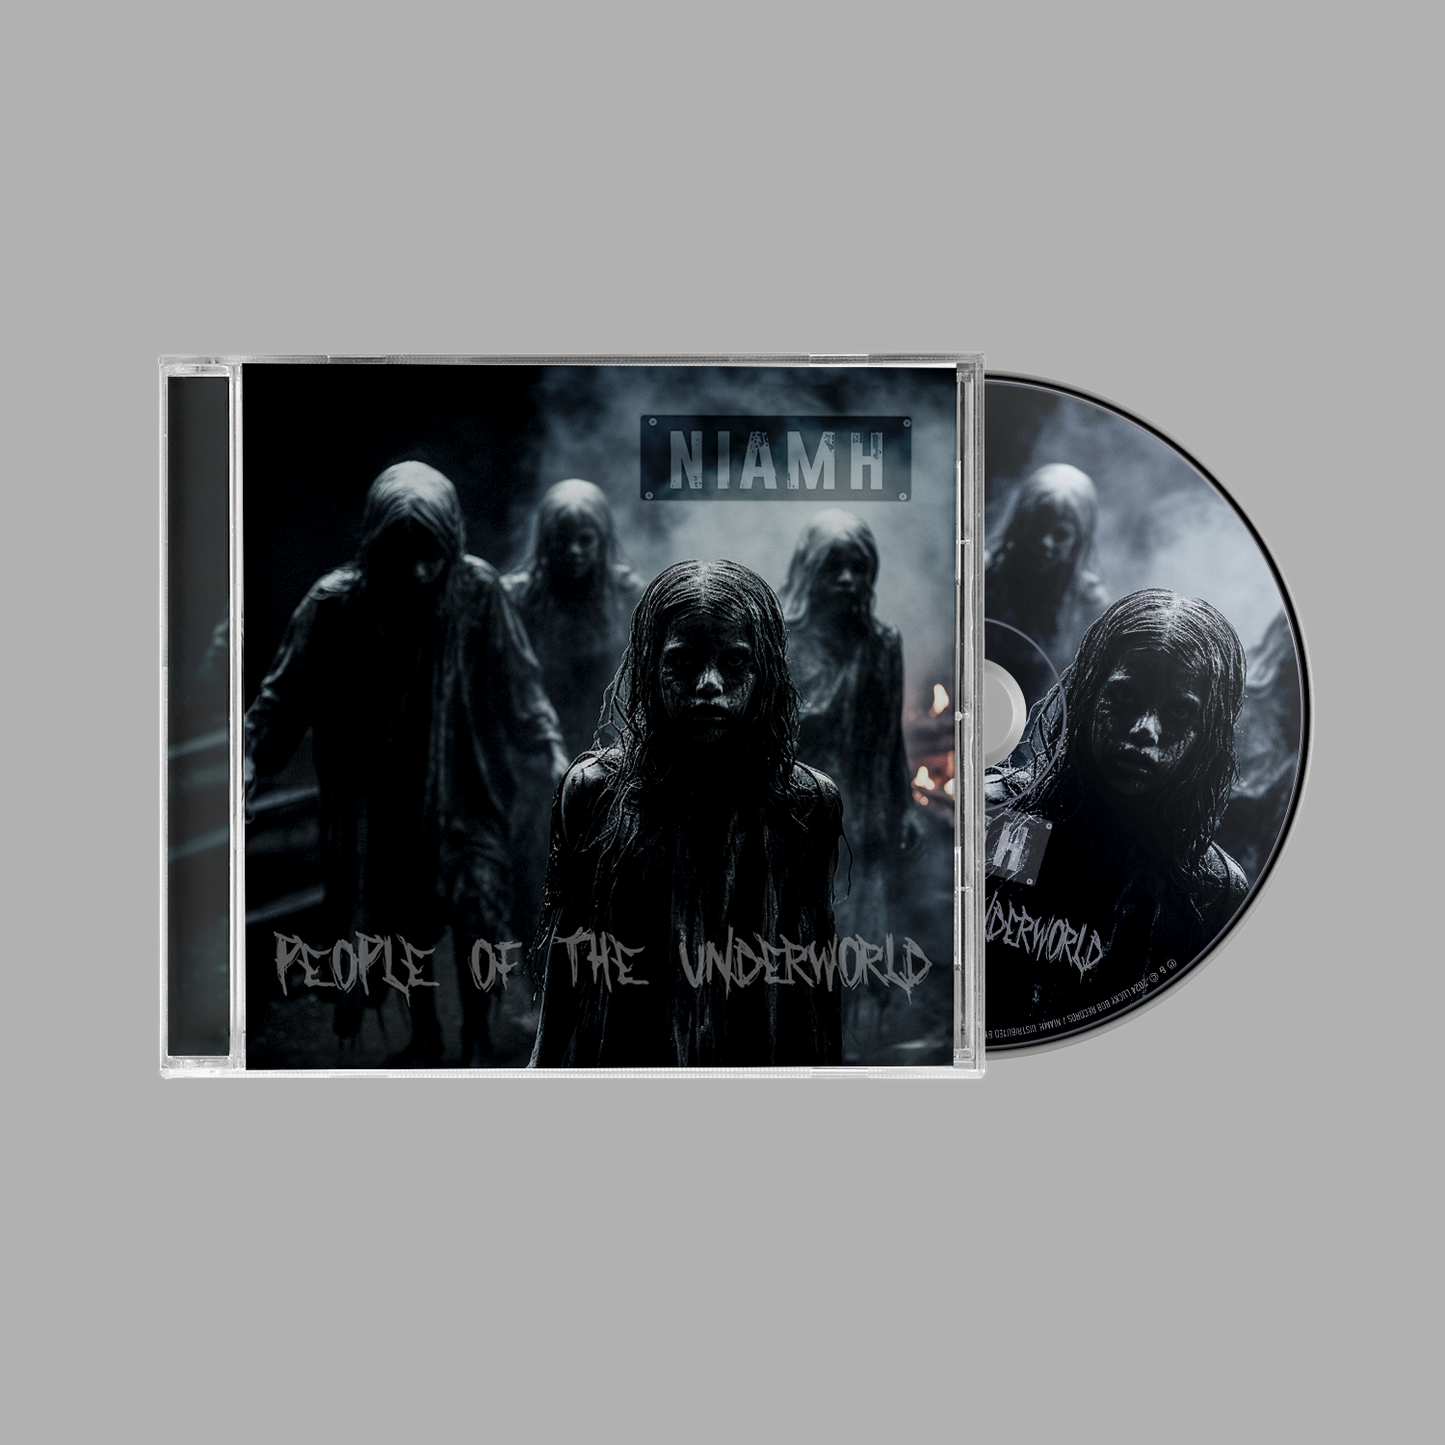 CD "People Of The Underworld"